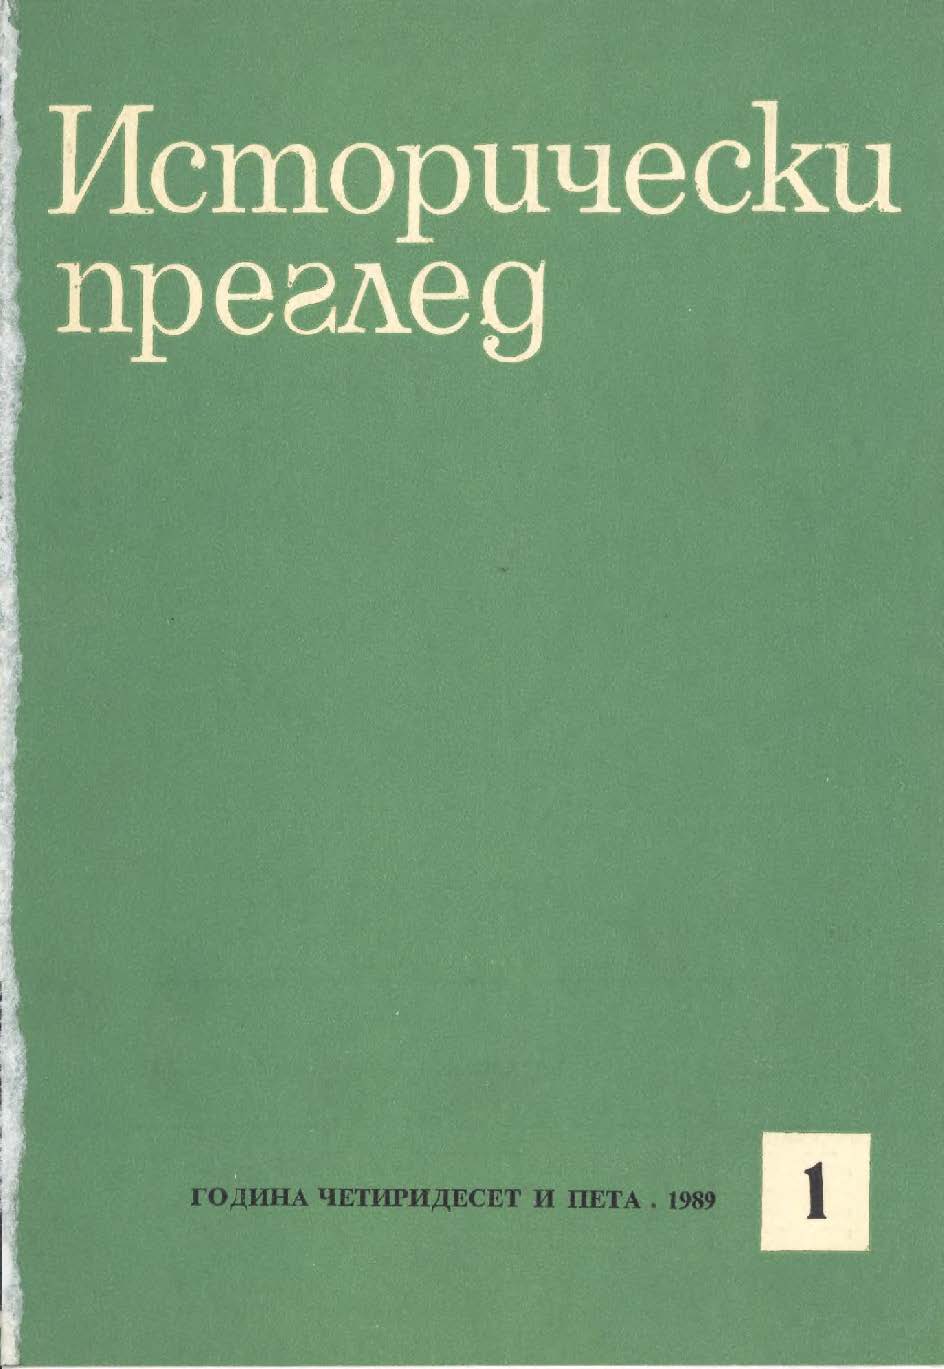 Academician Dimităr Kosev’s 85th Anniversary Cover Image